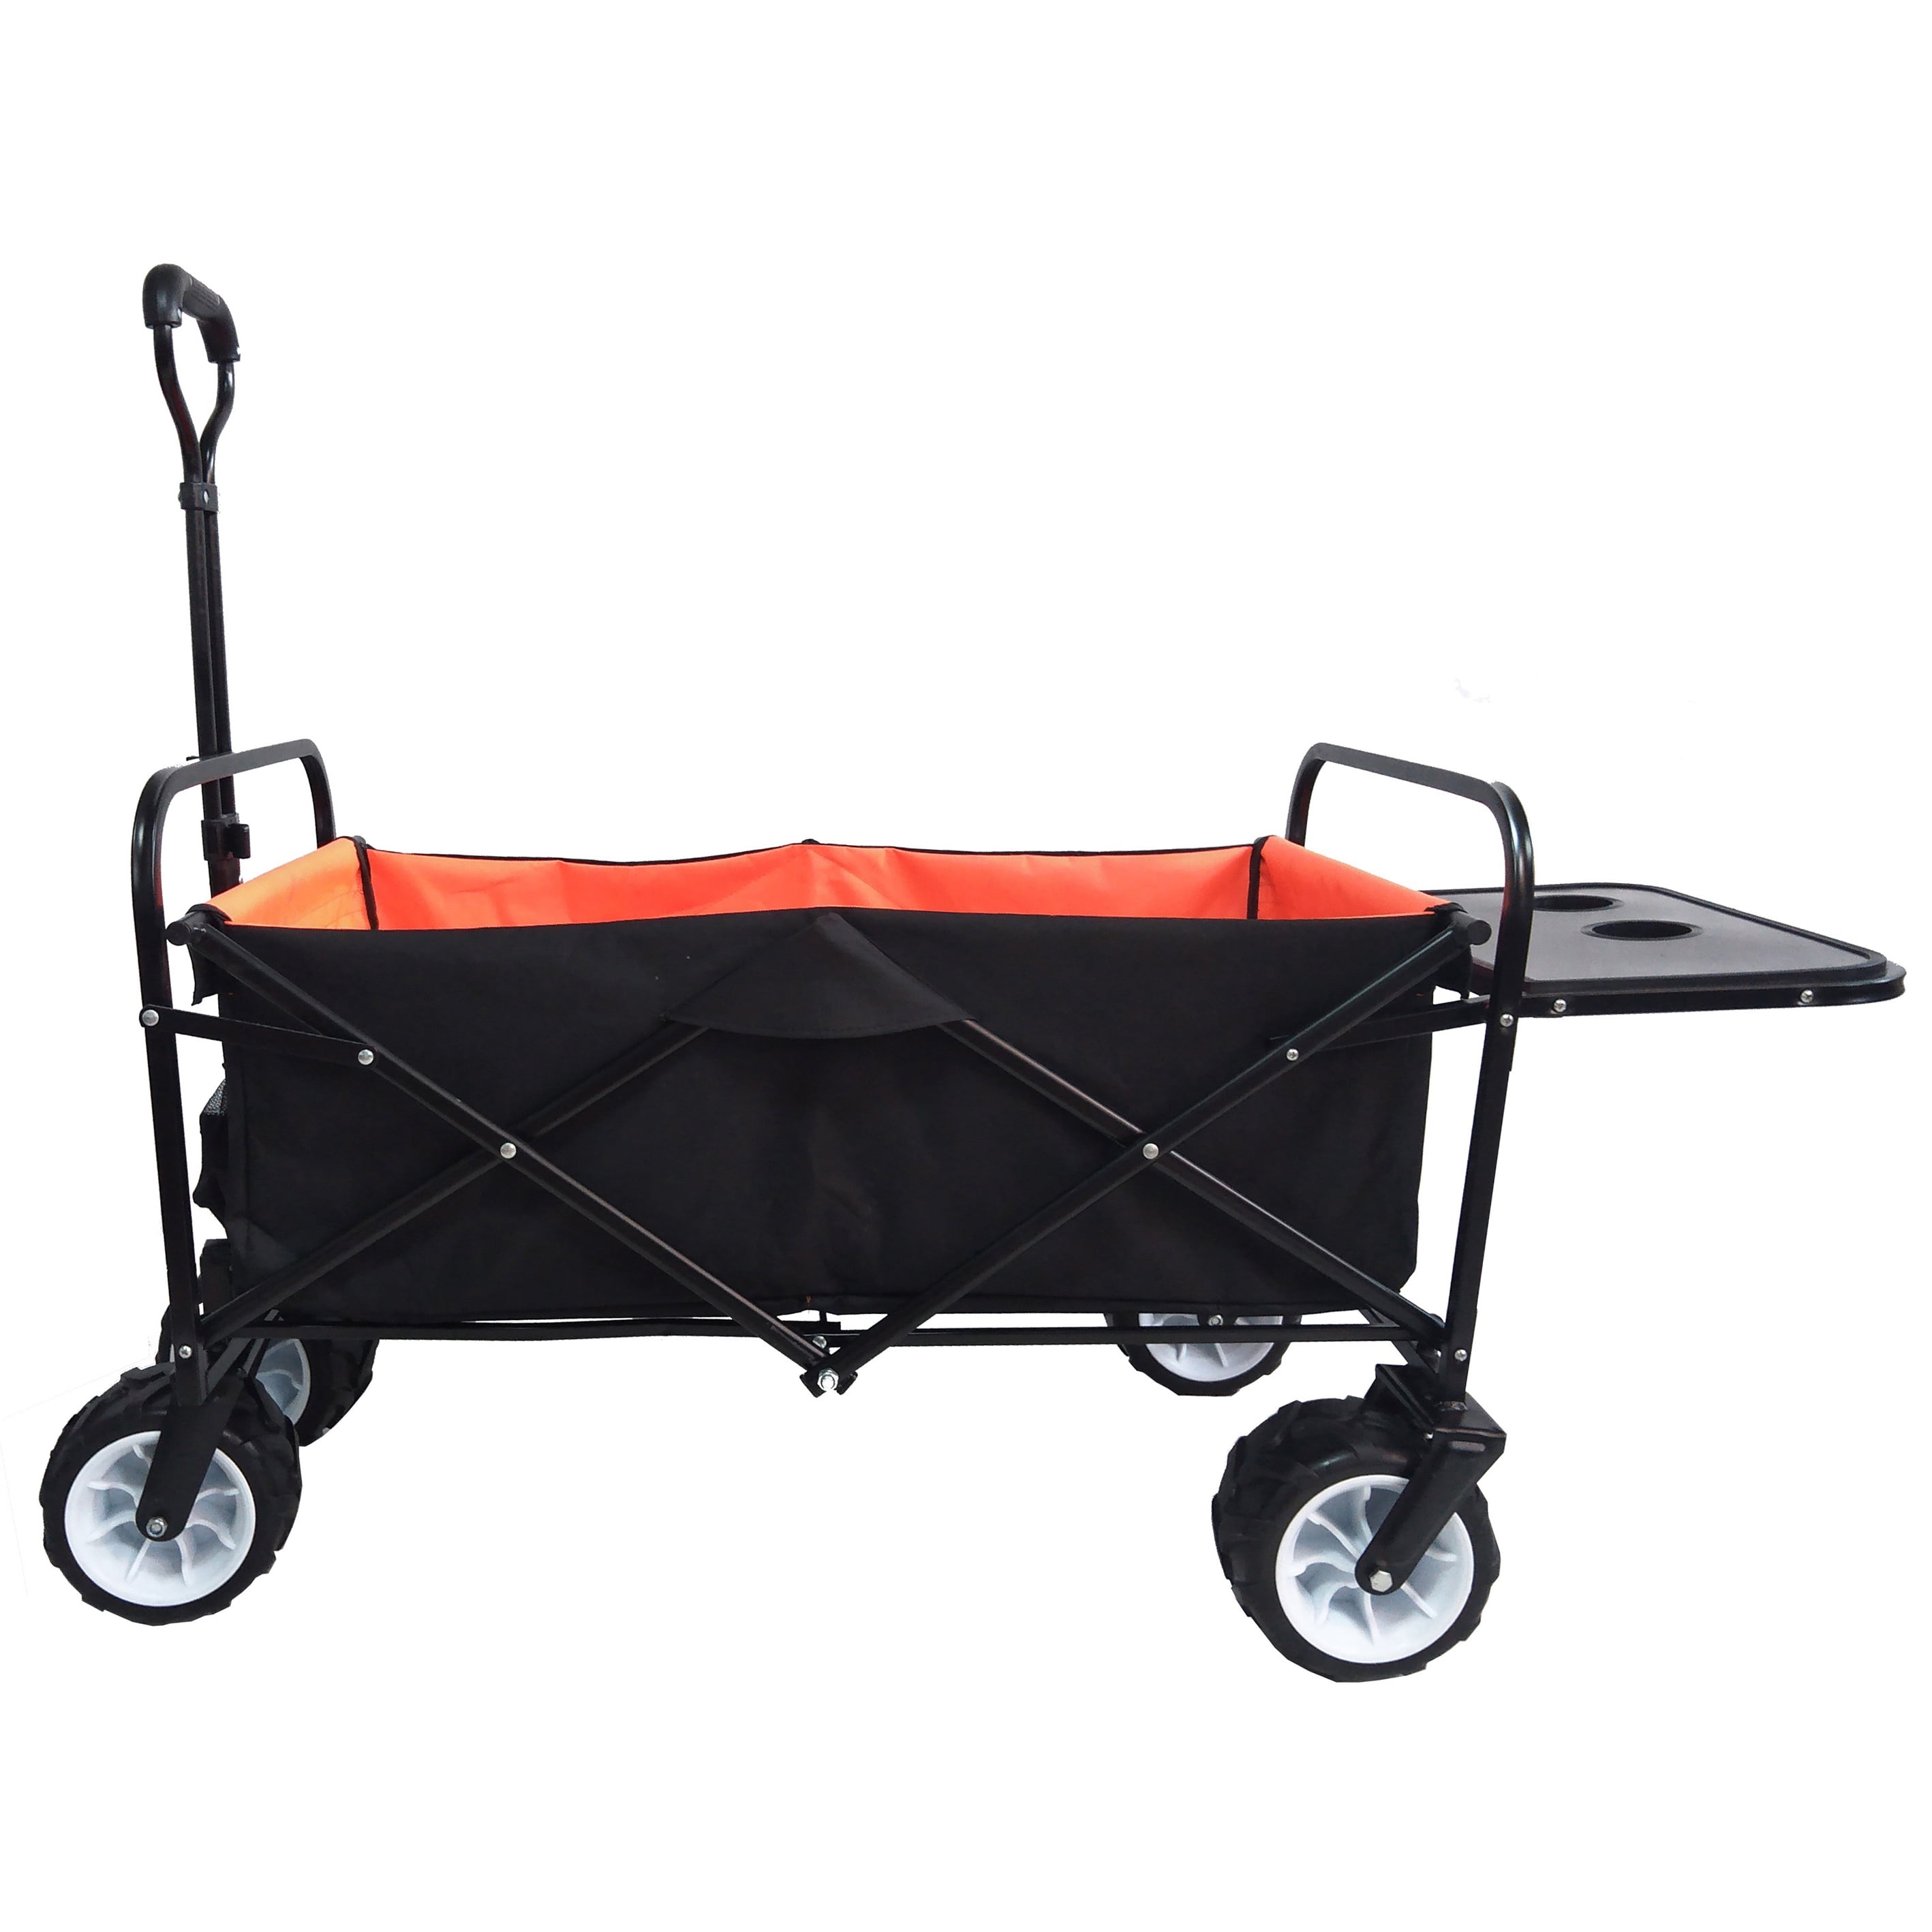 Details about   Garden Cart Collapsible Beach Cart Folding Wagon Utility Shopping Cart Outdoor 